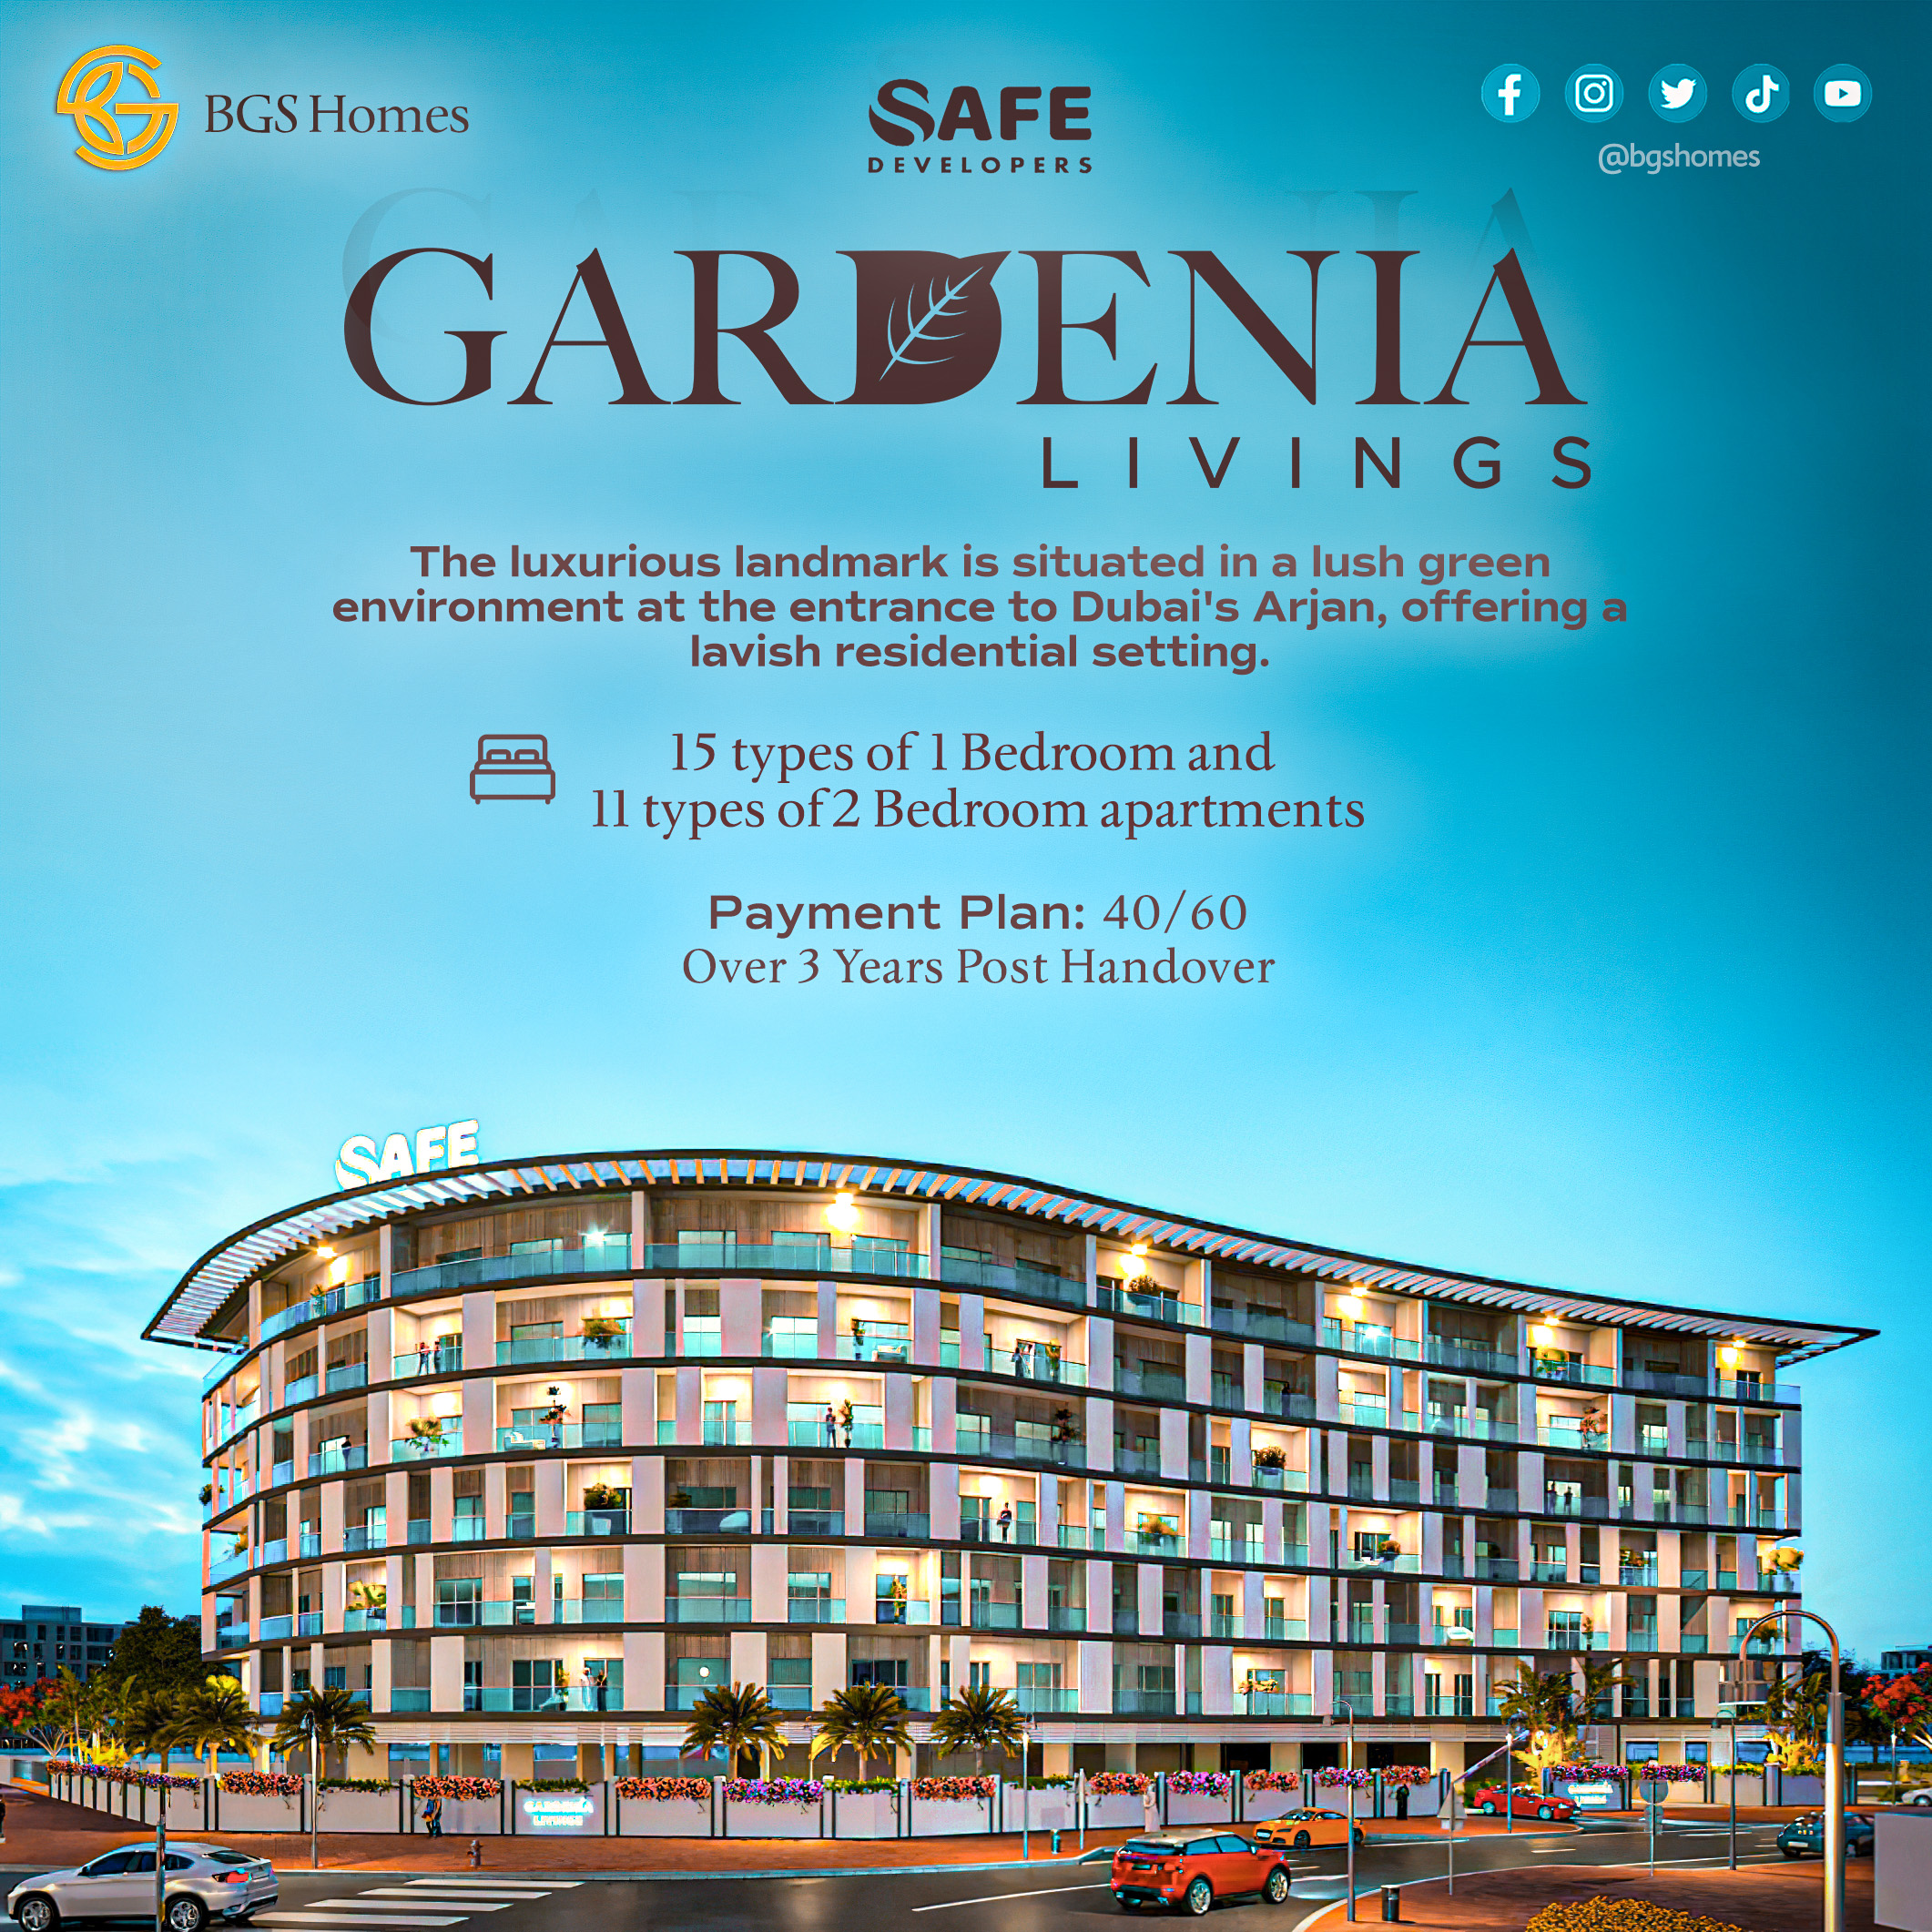 2 BR Apartments for sale in Gardenia Livings, Arjan – BGS Homes